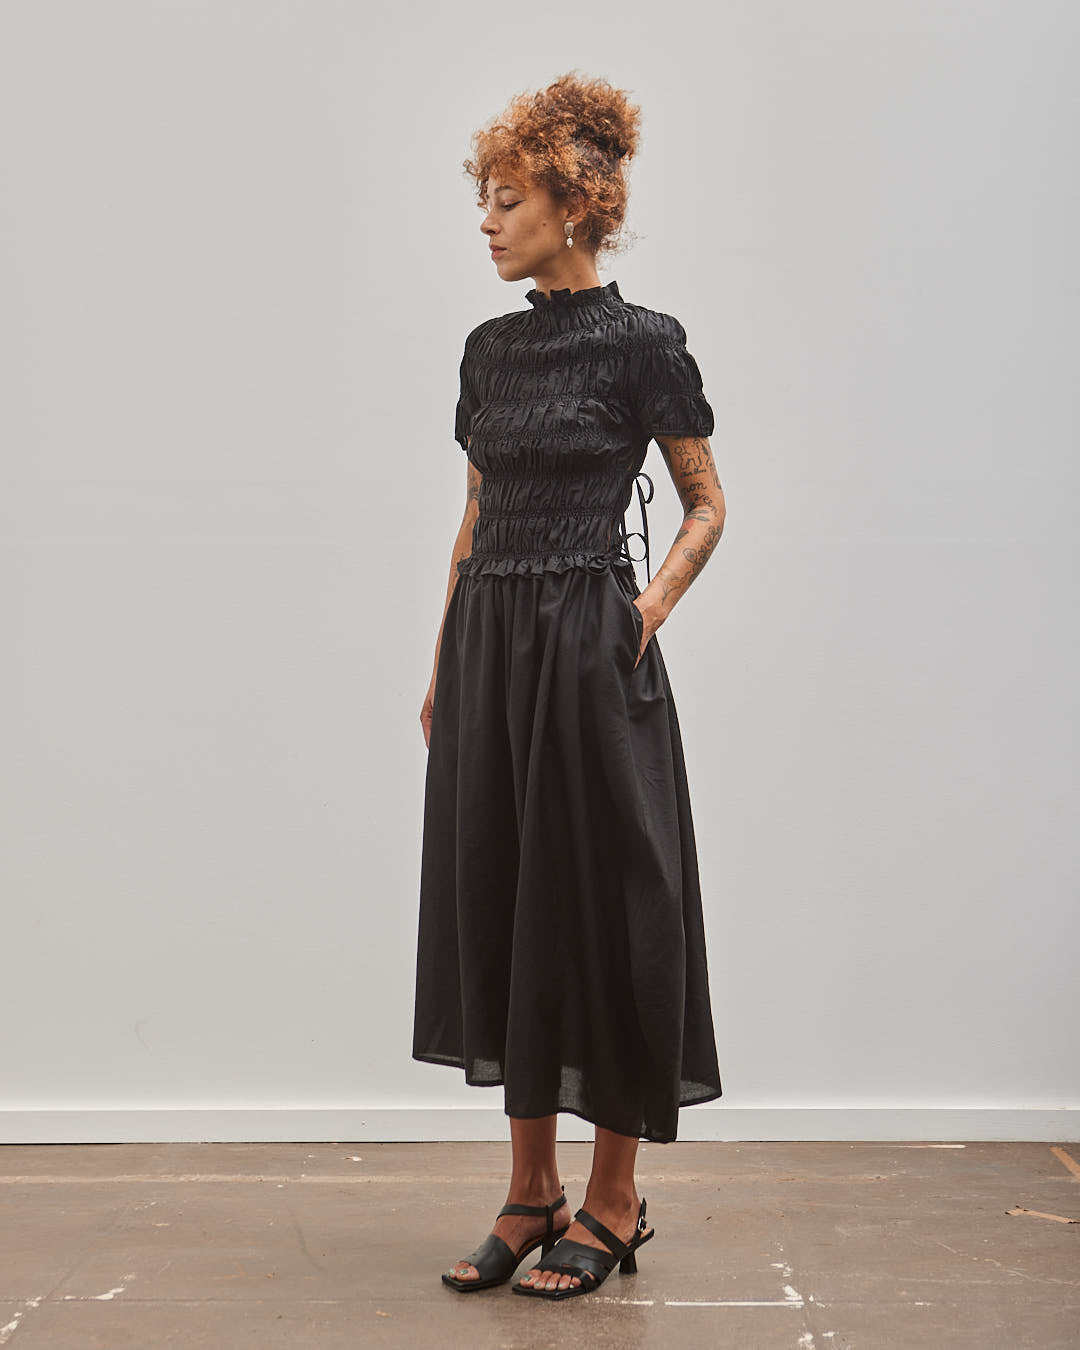 Cordera Sculpted Dress, Black, Side View